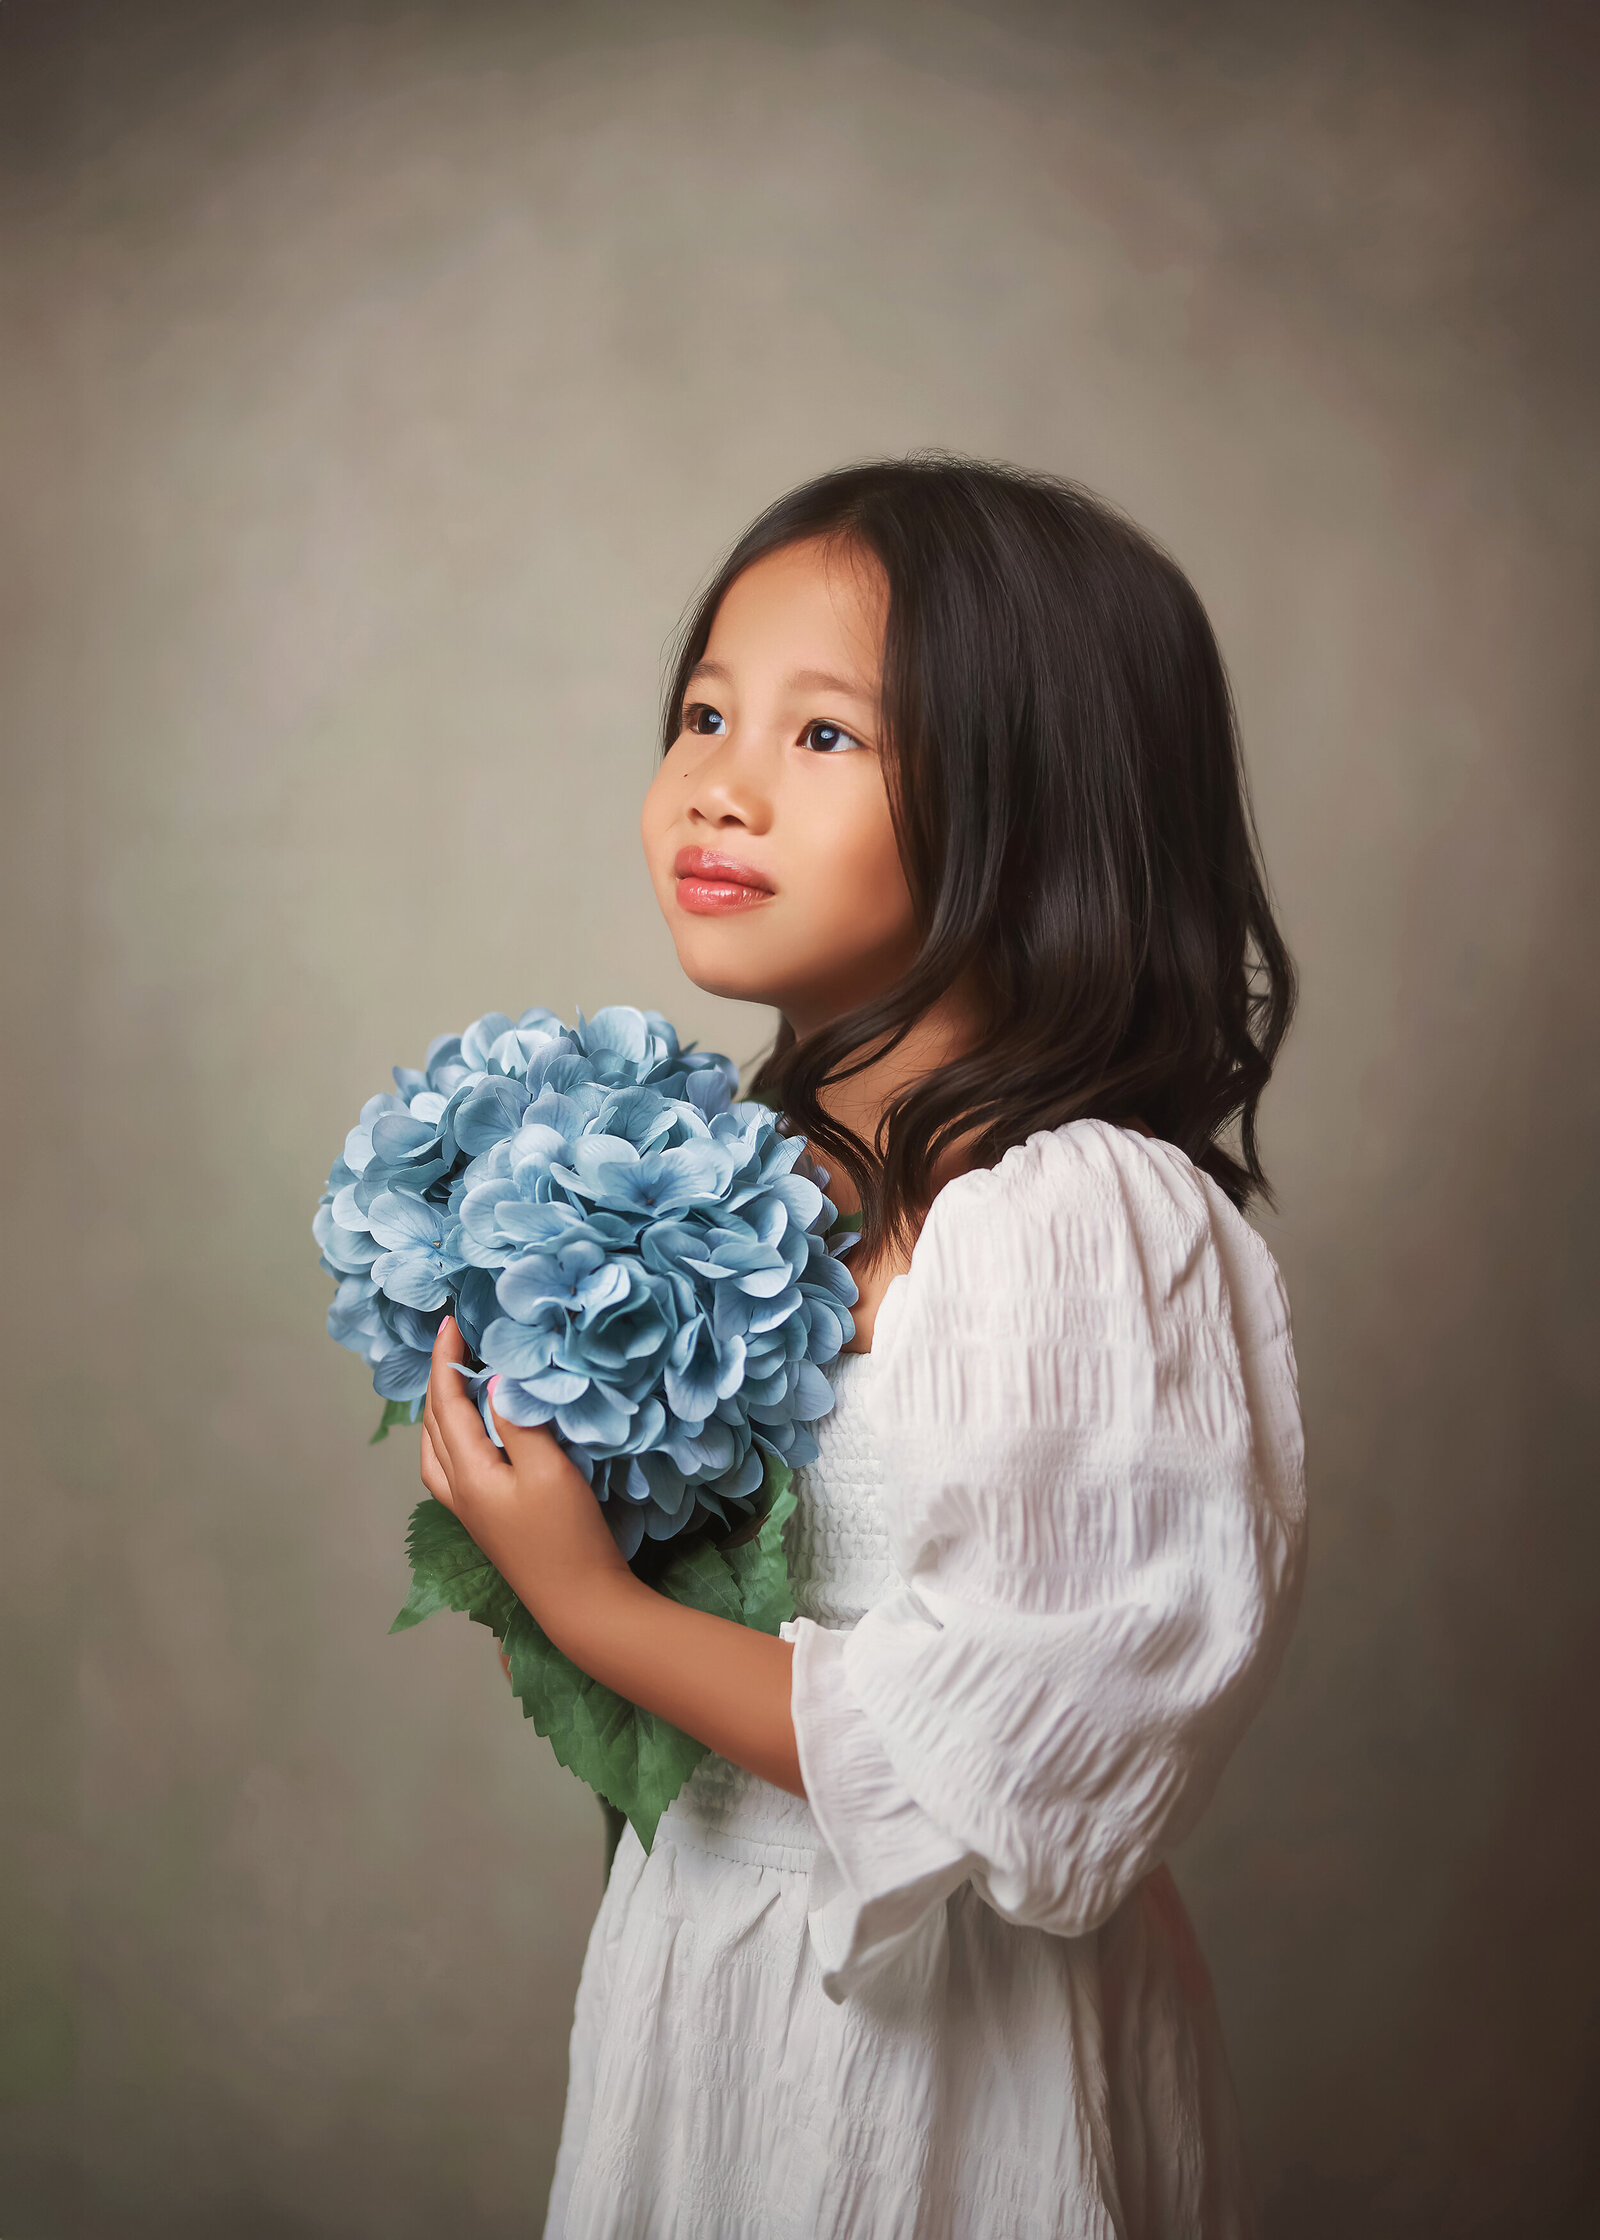 atlanta-best-award-winning-children-girl-fine-art-portrait-studio-6-7-8-year-old-birthday-milestone-white-dress-flowers-photography-photographer-twin-rivers-01